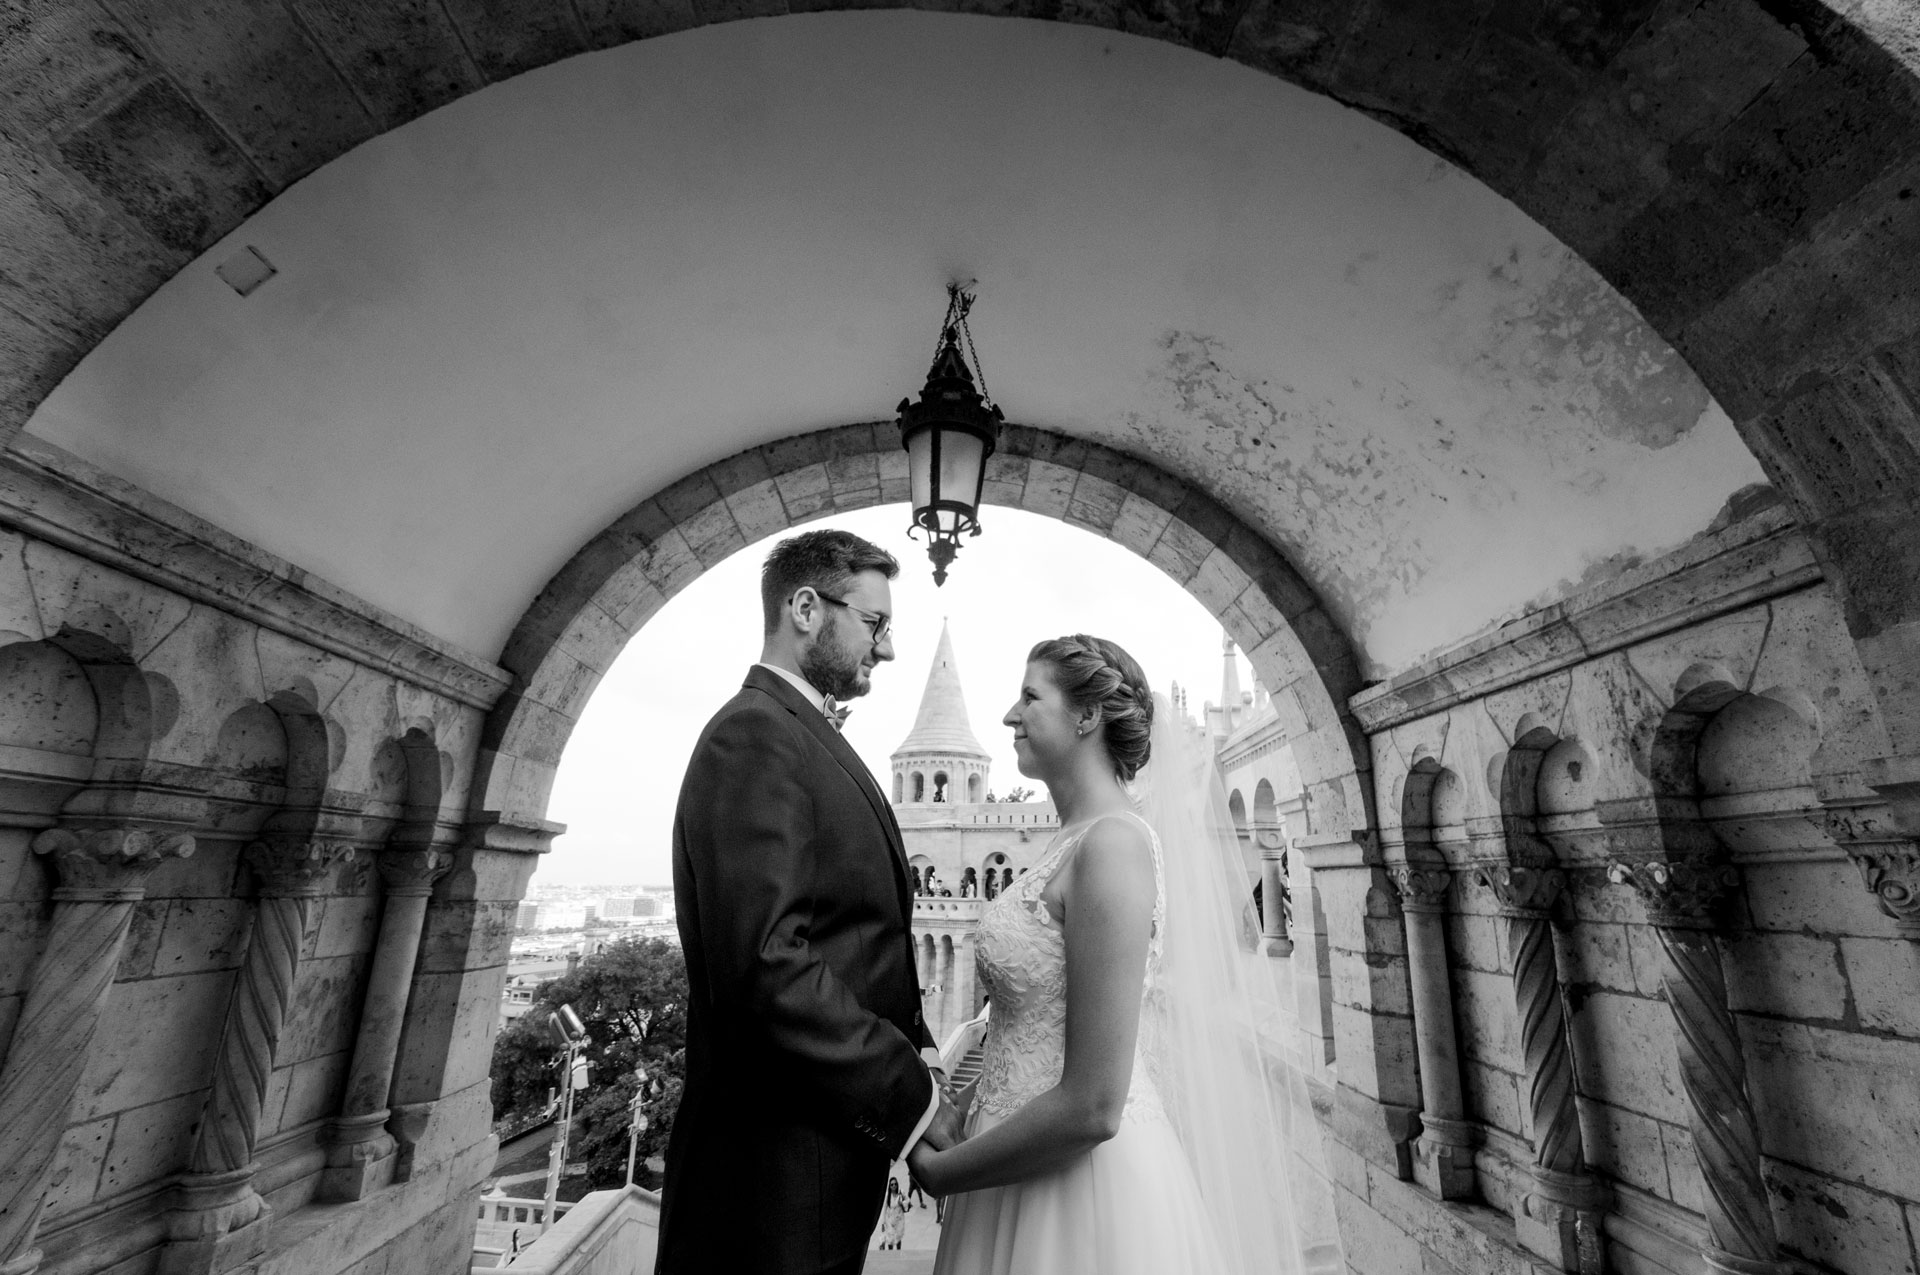 Budapest adventure wedding and honeymoon choice